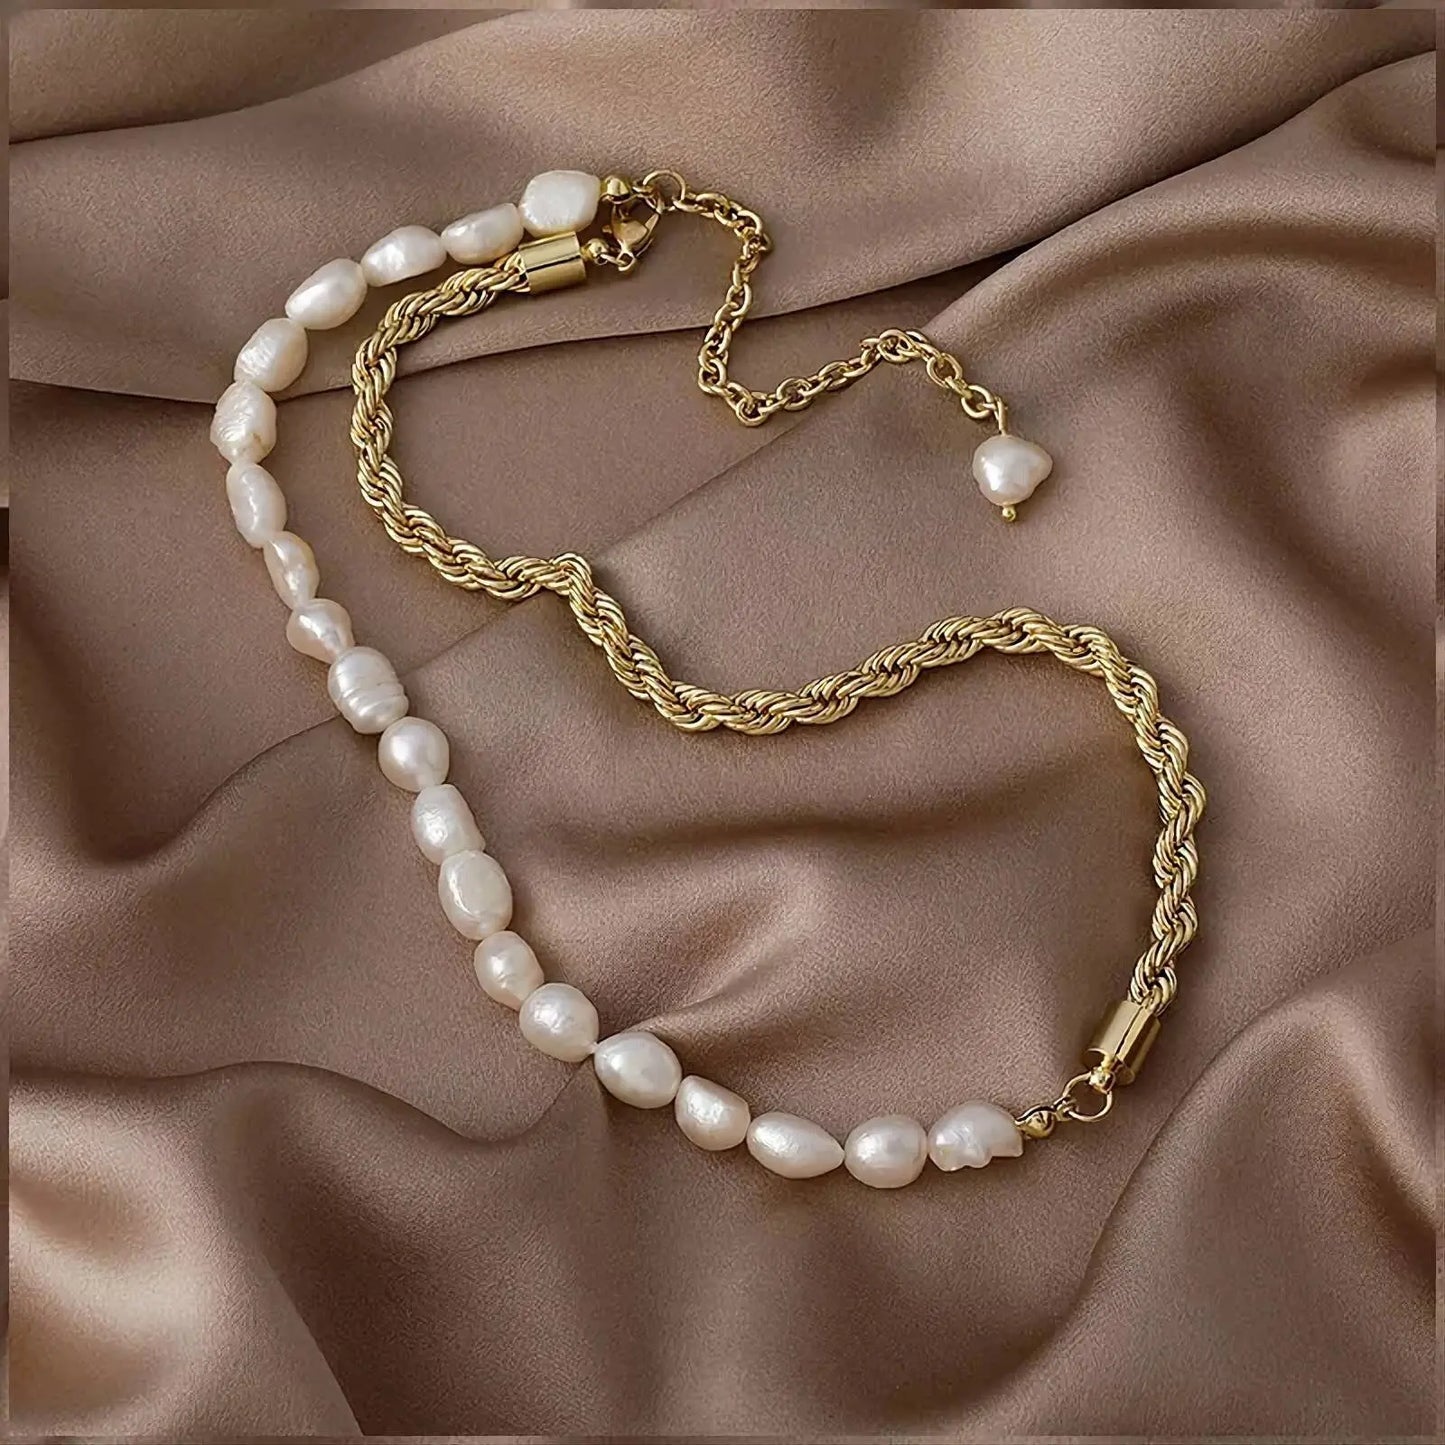 Half Imitation Pearl Half Gold Rope Chain Necklace Pendant Vintage Freshwater Pearl Twist Choker Necklace JettsJewelers